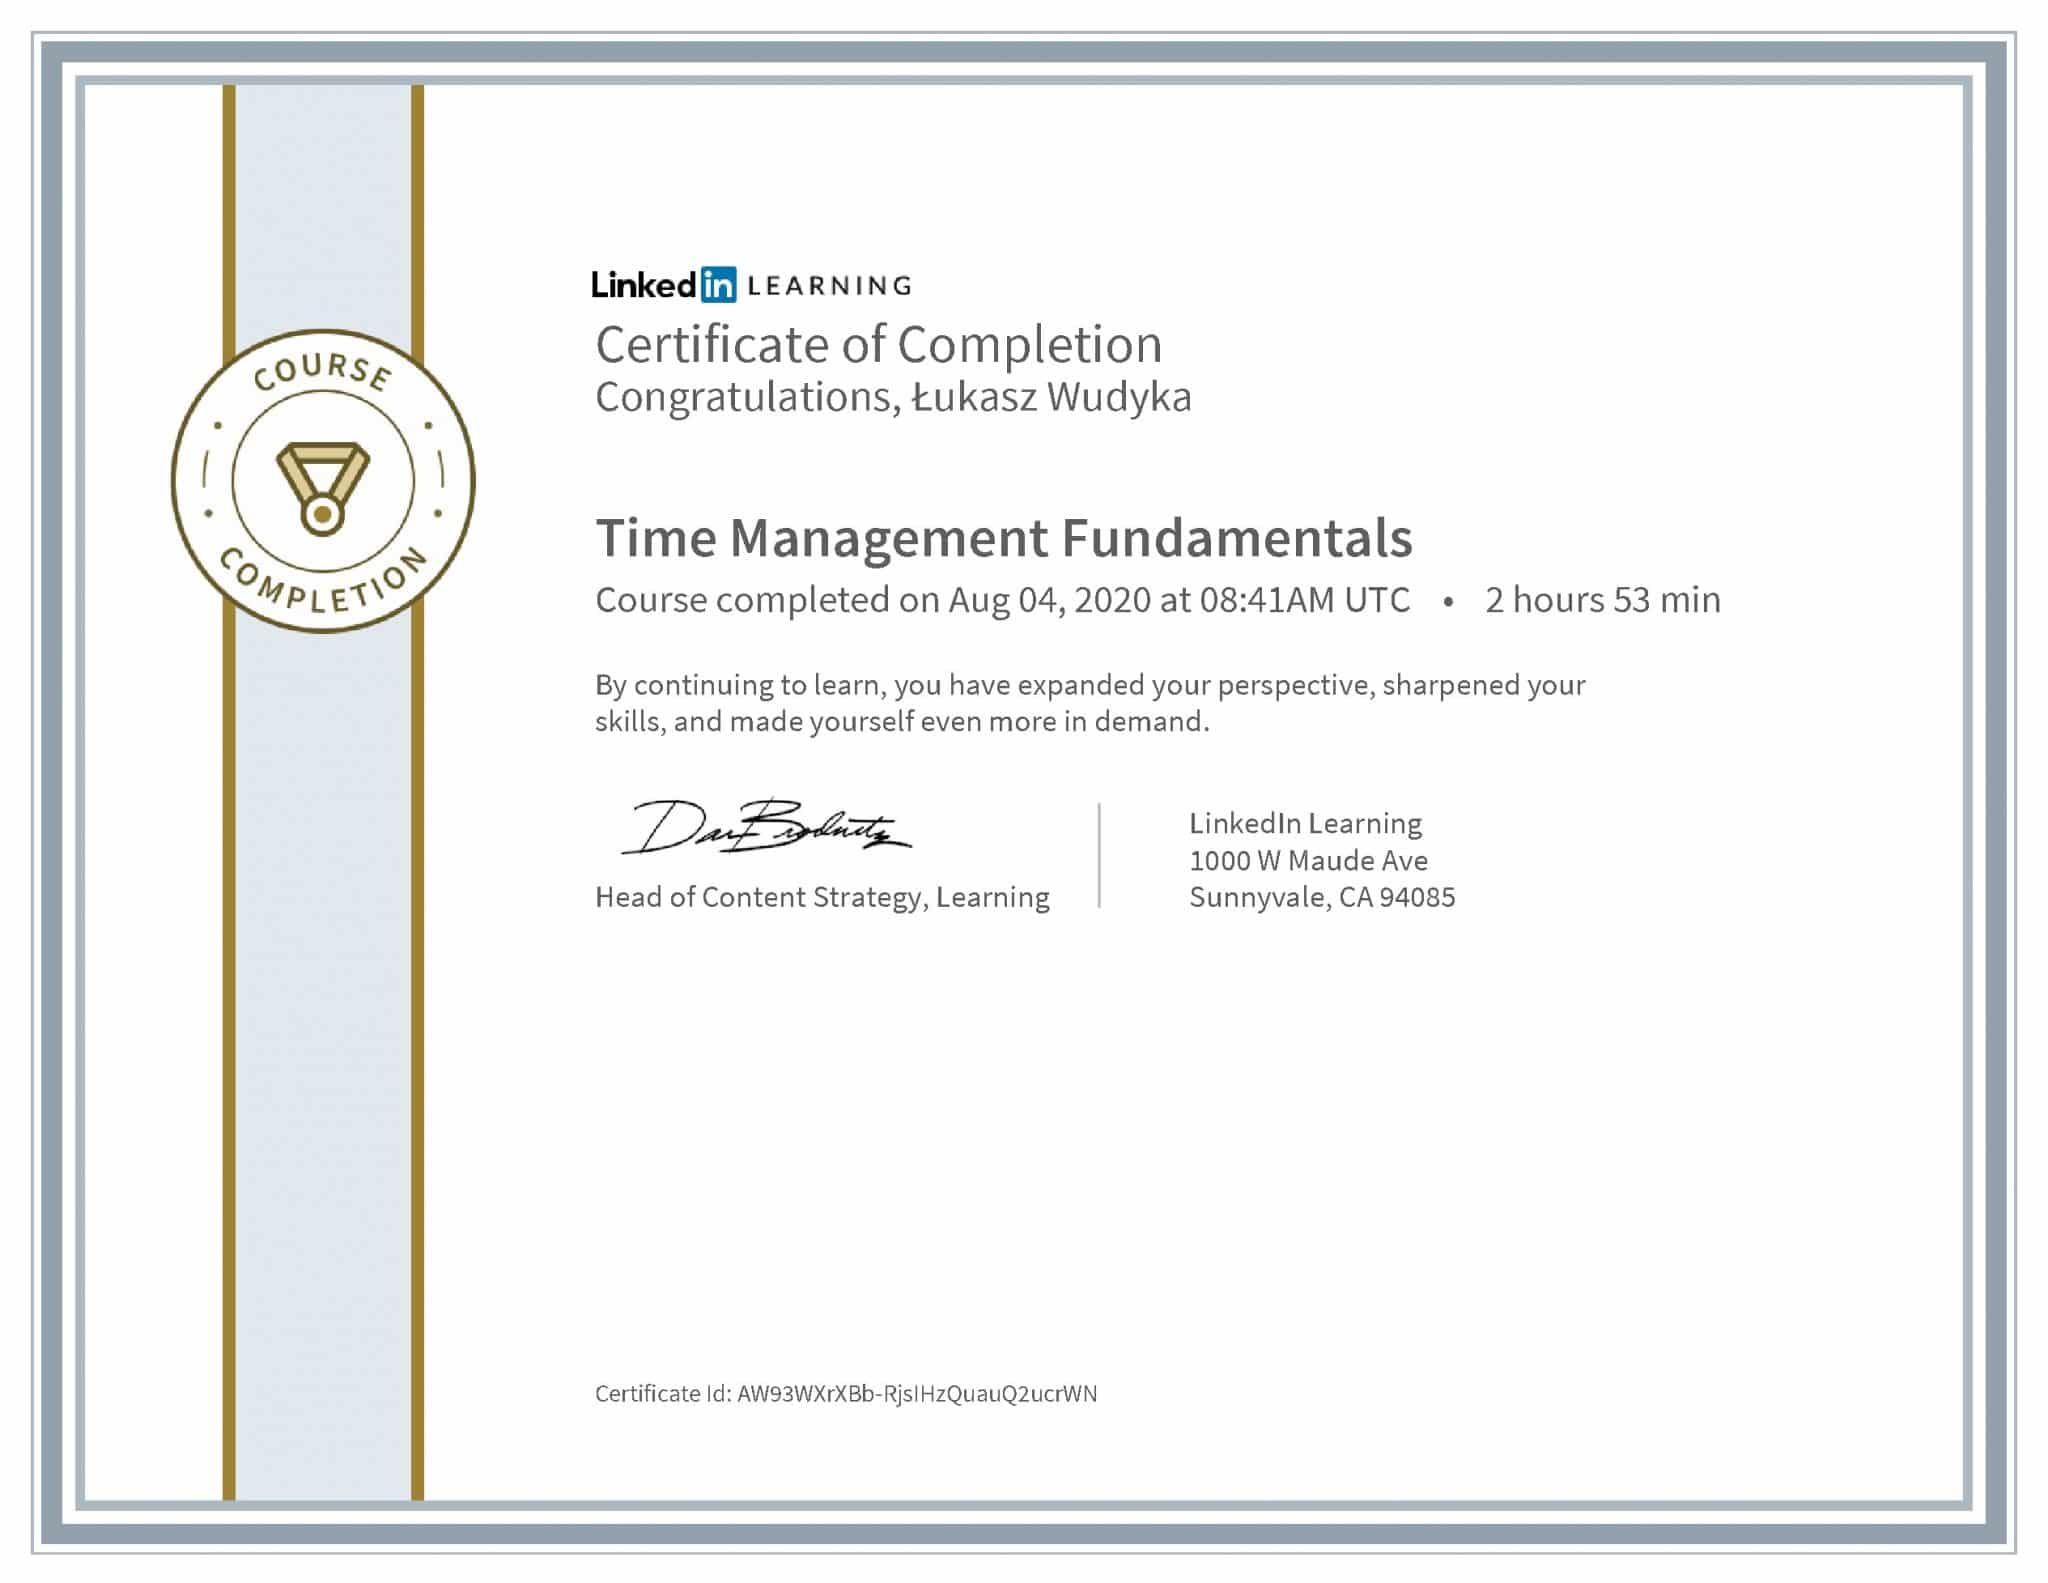 Łukasz Wudyka certyfikat LinkedIn Time Management Fundamentals